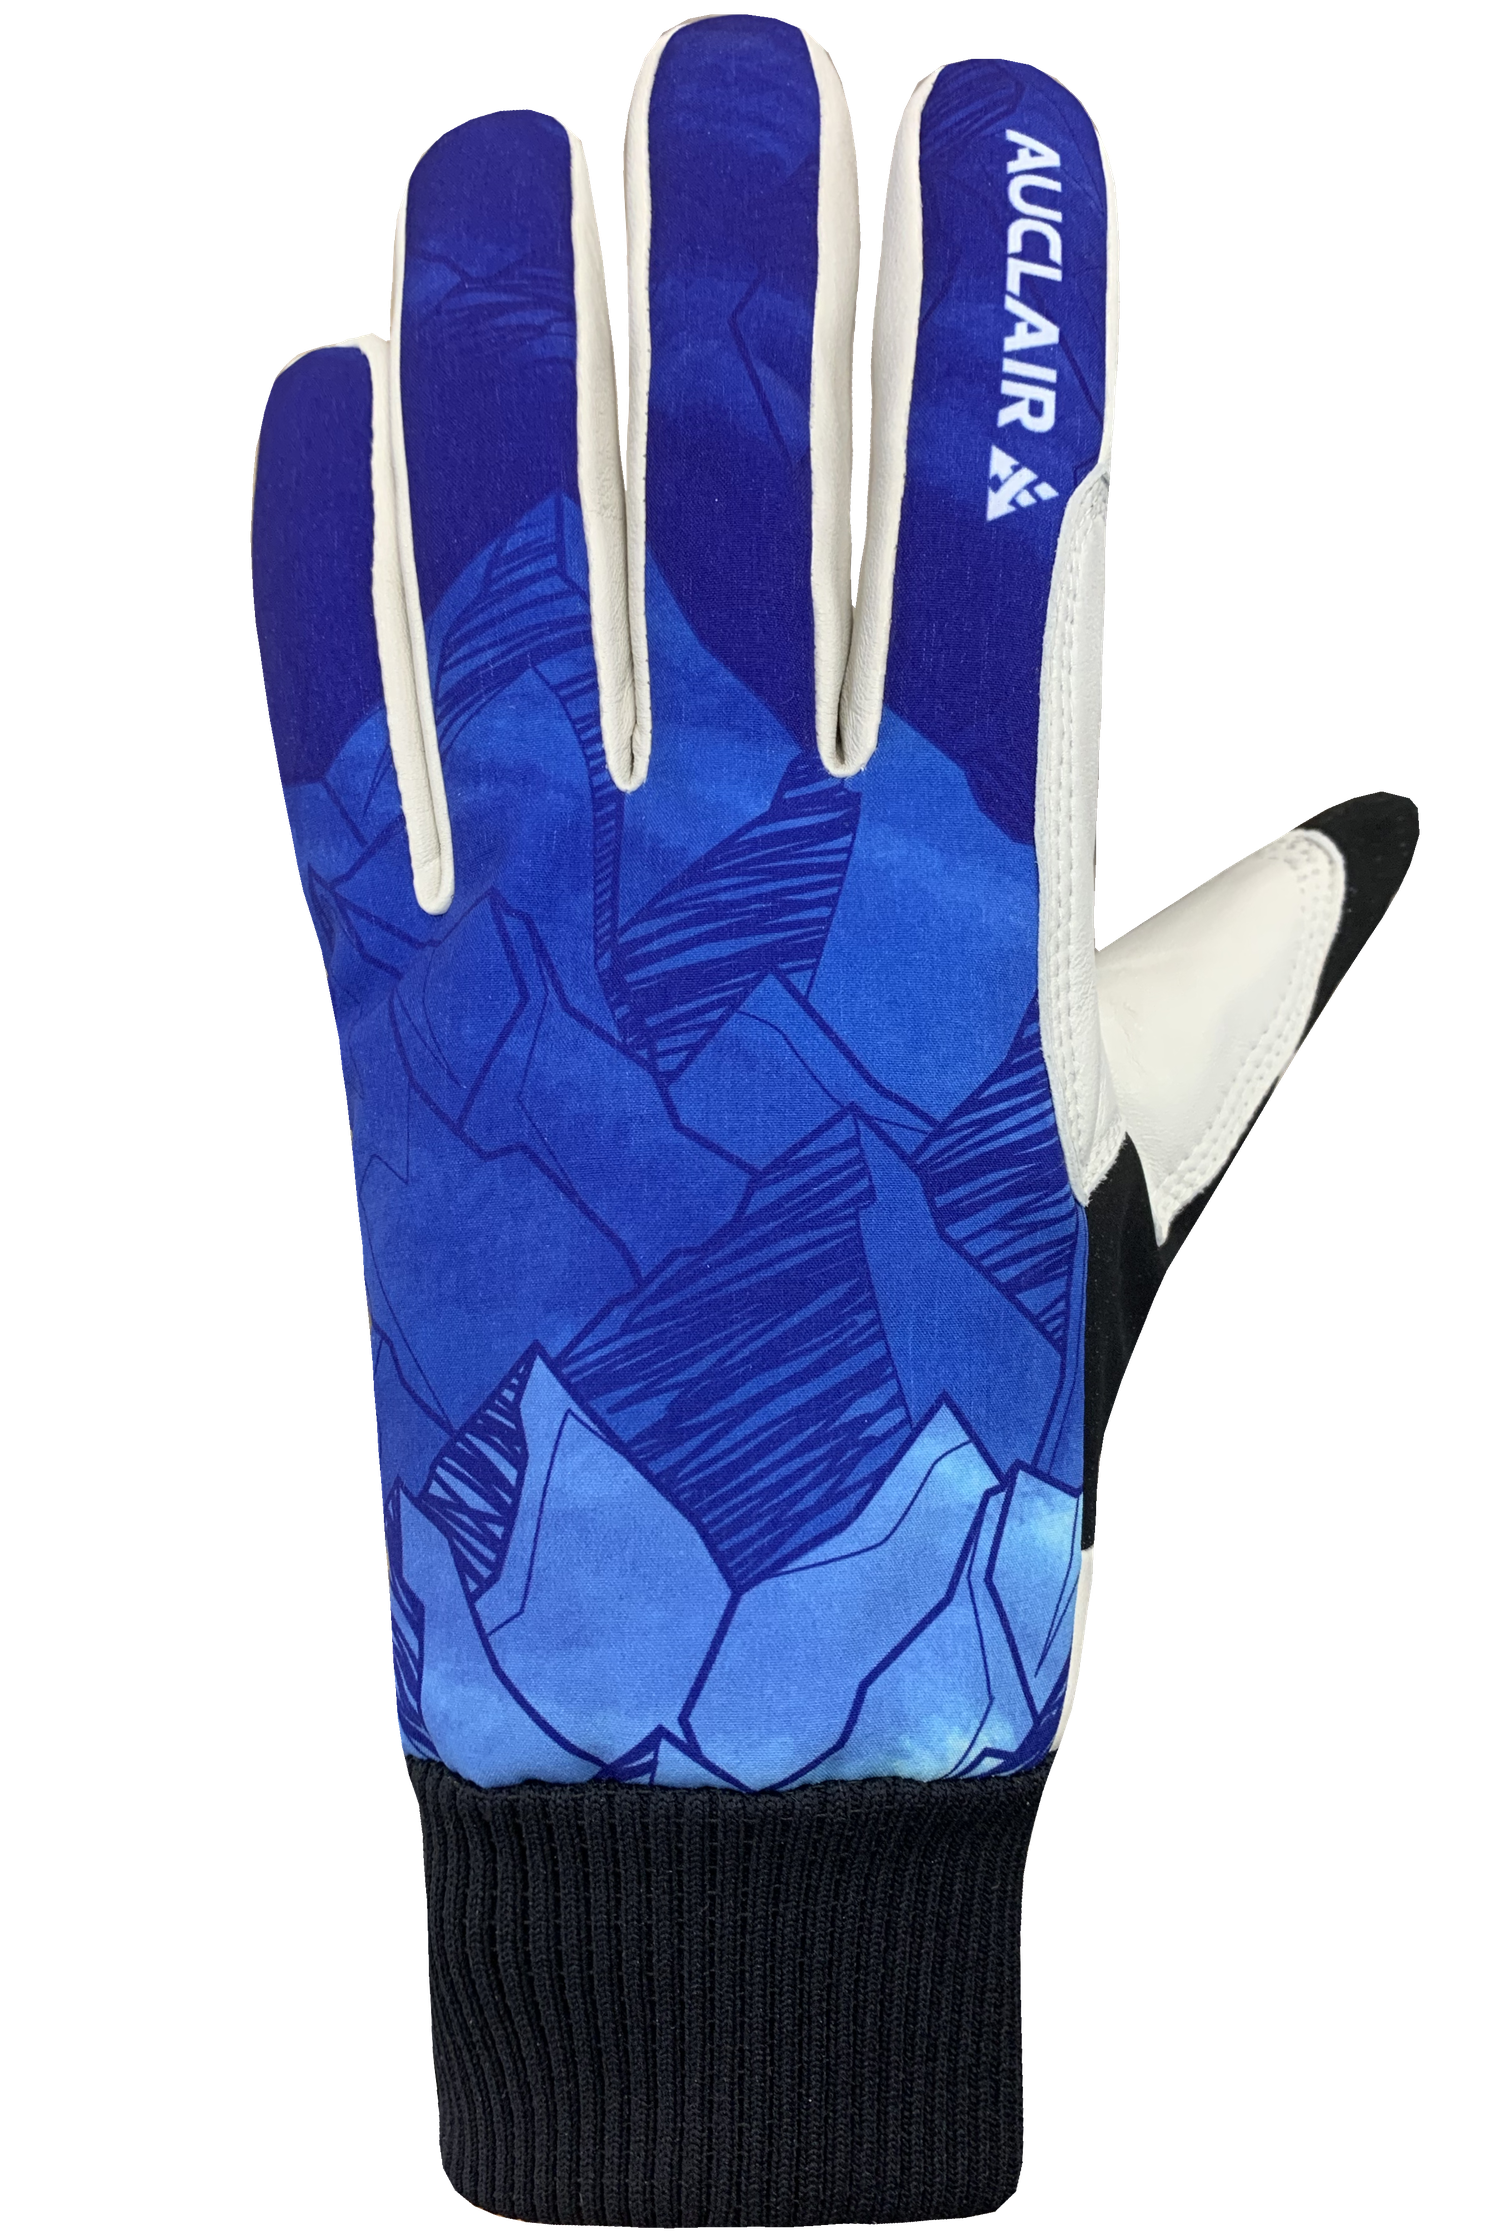 Stormi Gloves - Women, Blue/White